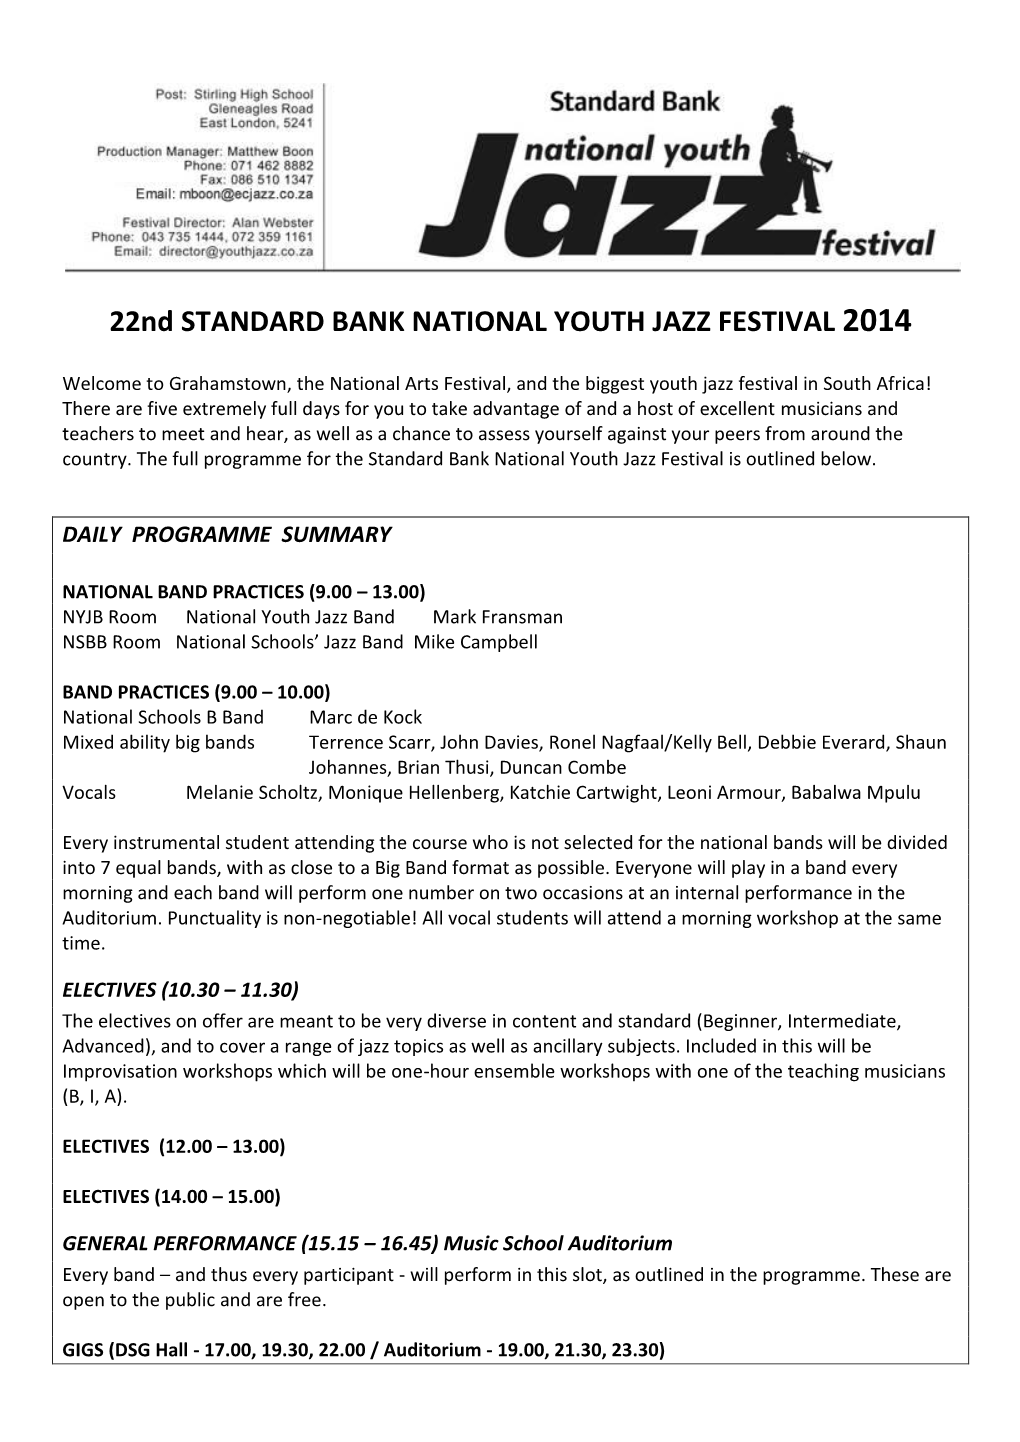 Joy of Jazz Festival, Grahamstown 2004